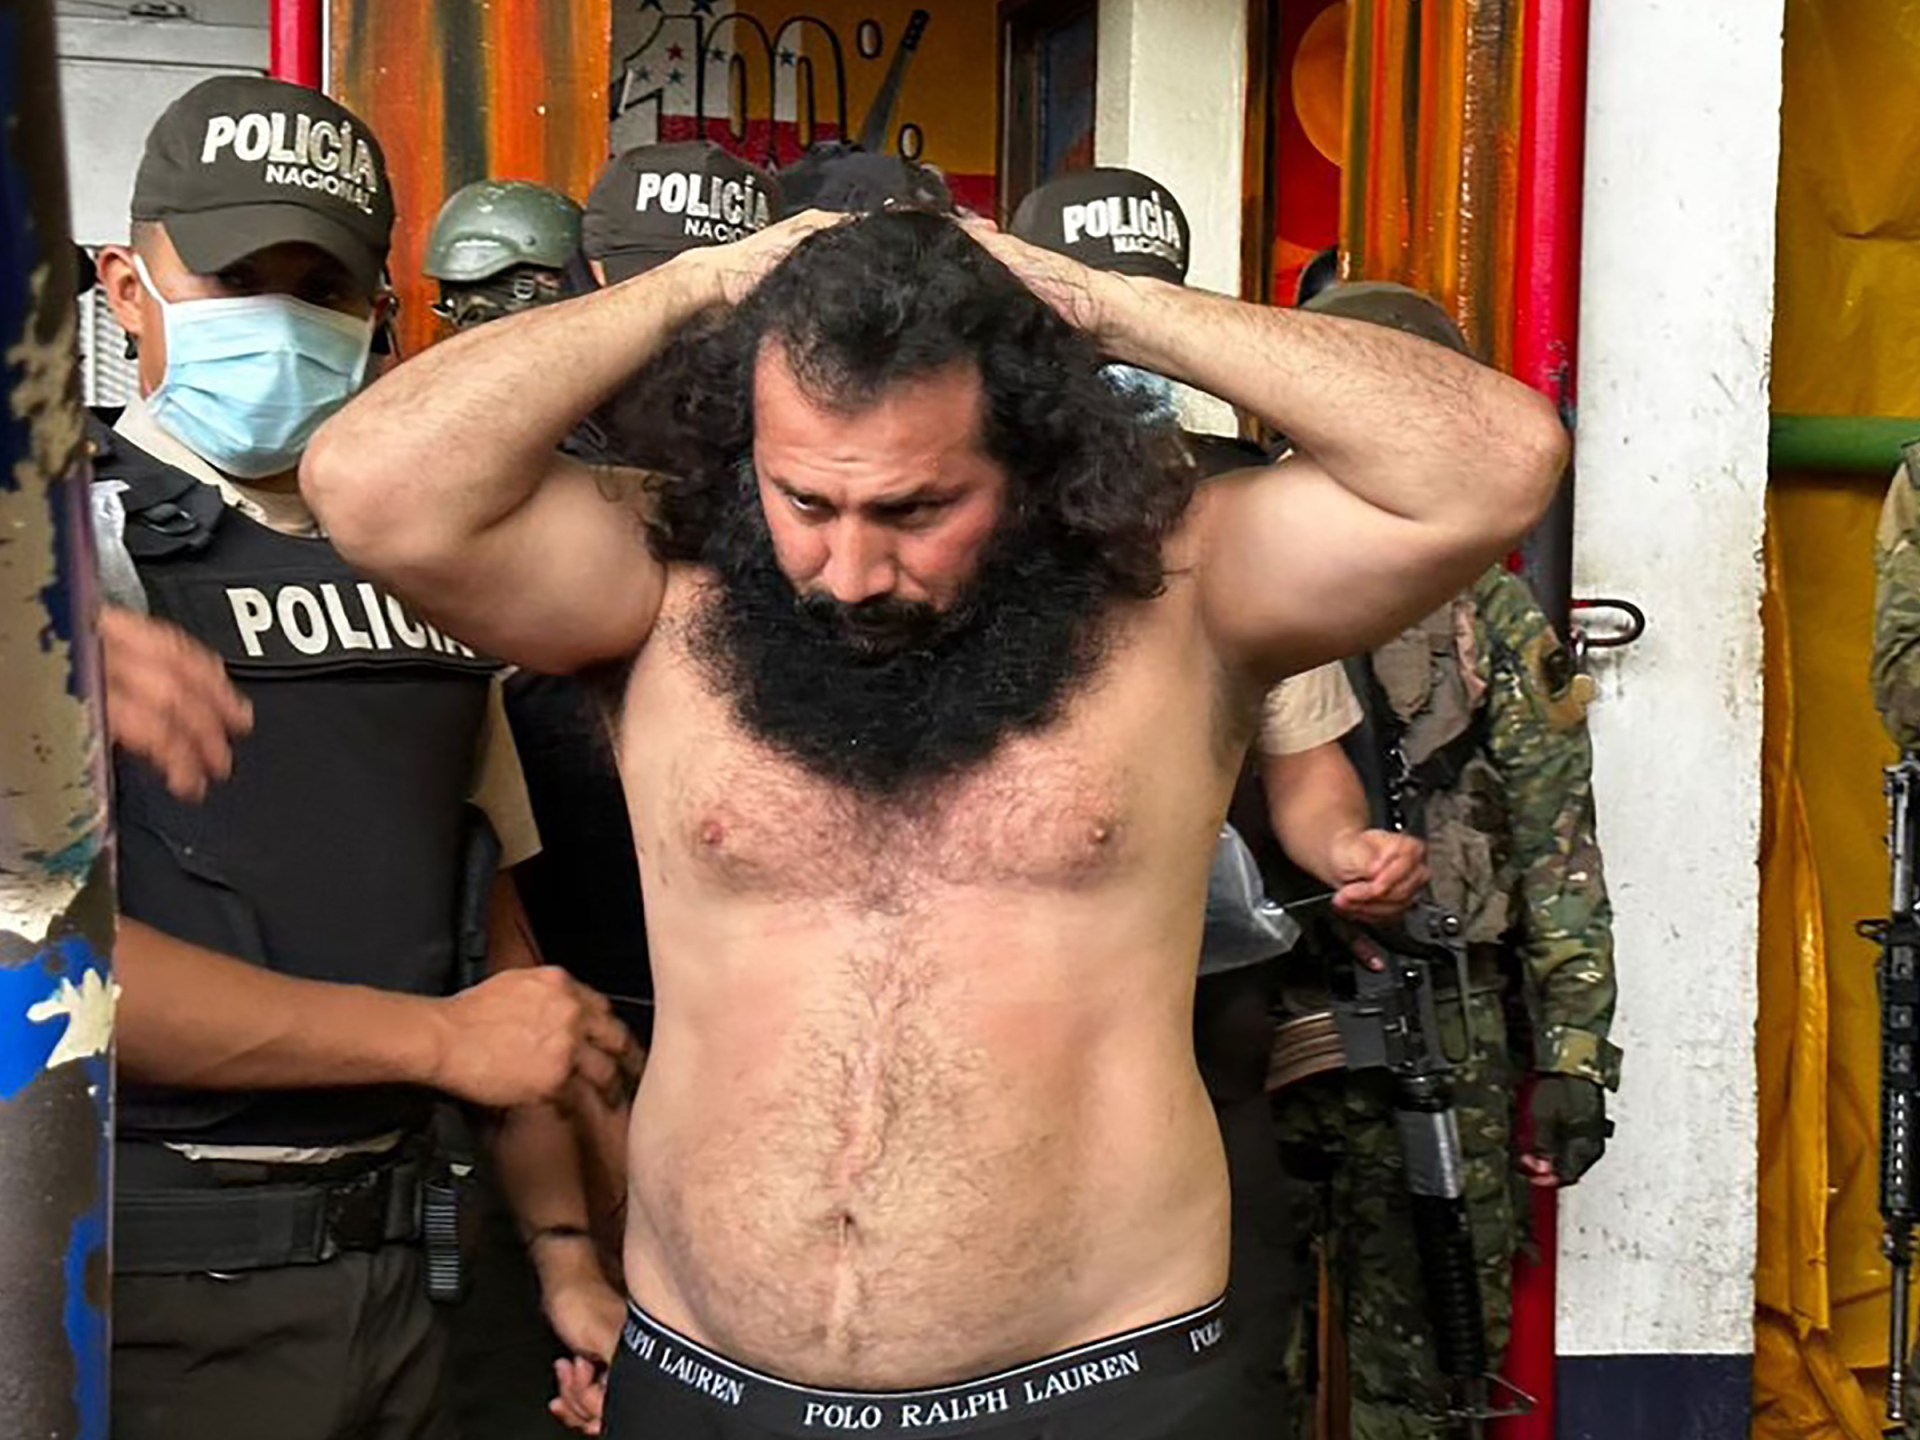 Ecuador gang boss who threatened Villavicencio moved to high-security jail